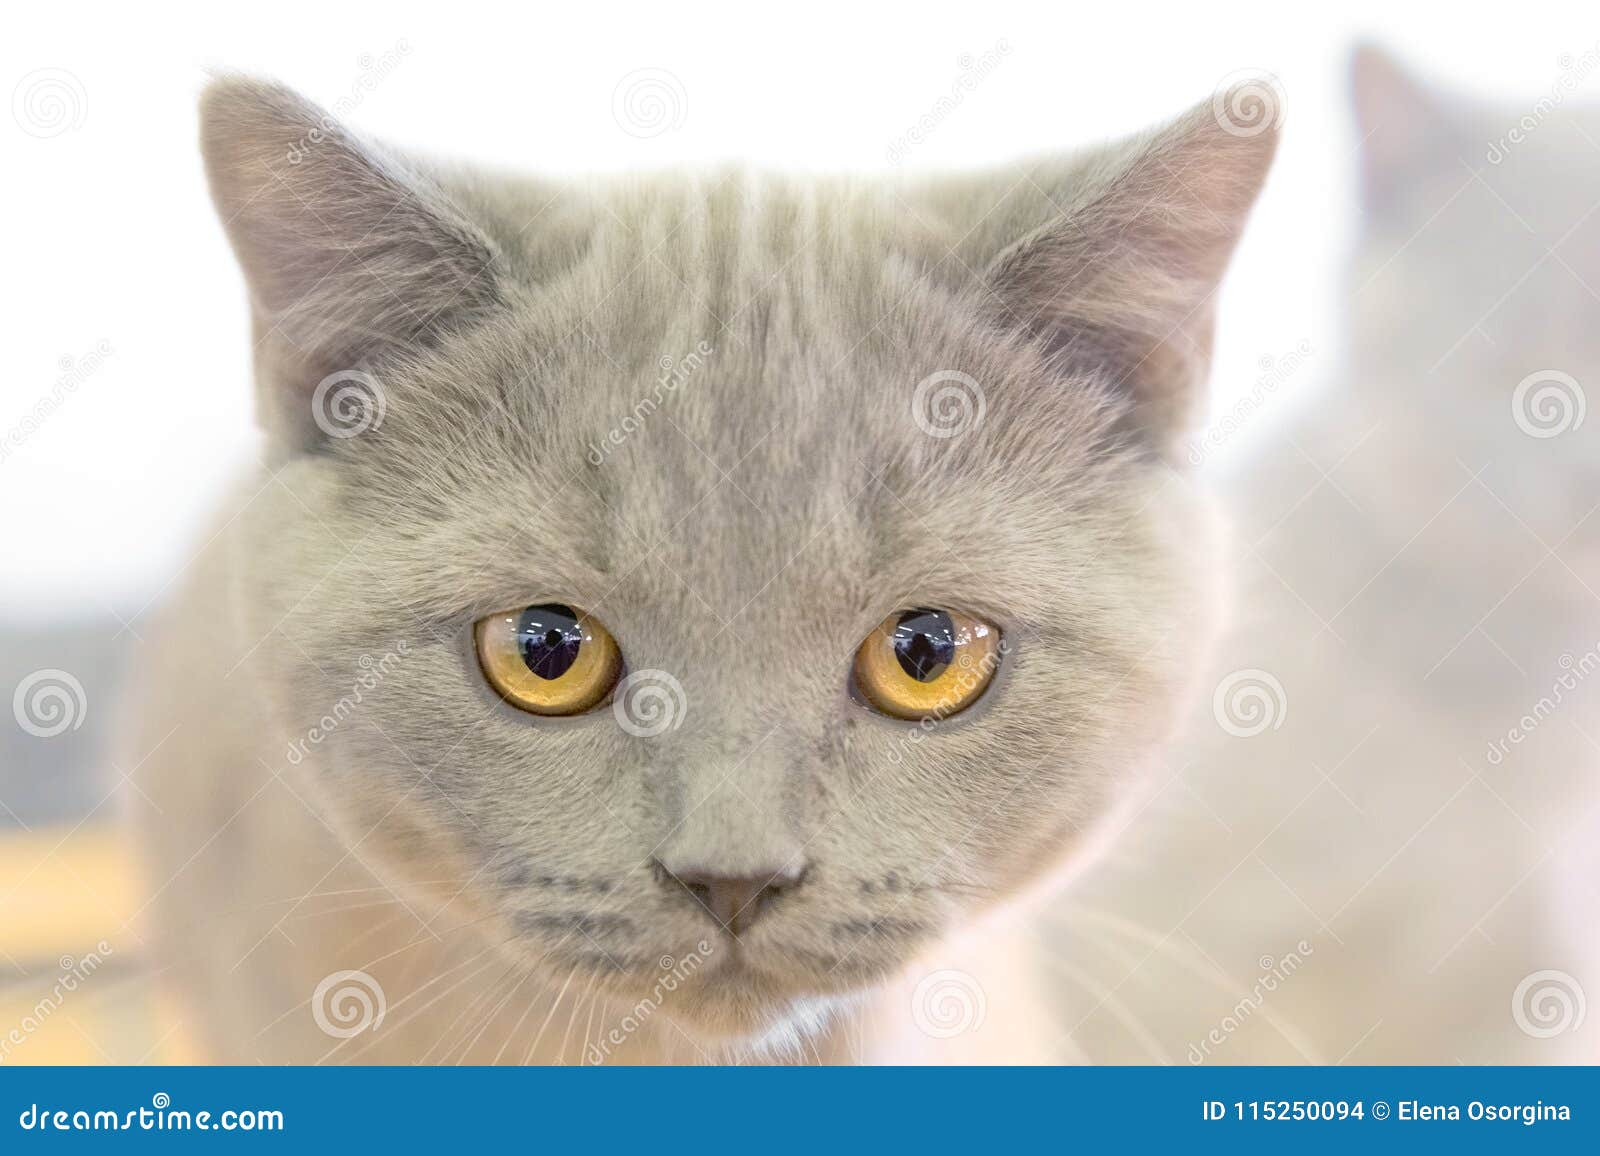 yellow shorthair cat